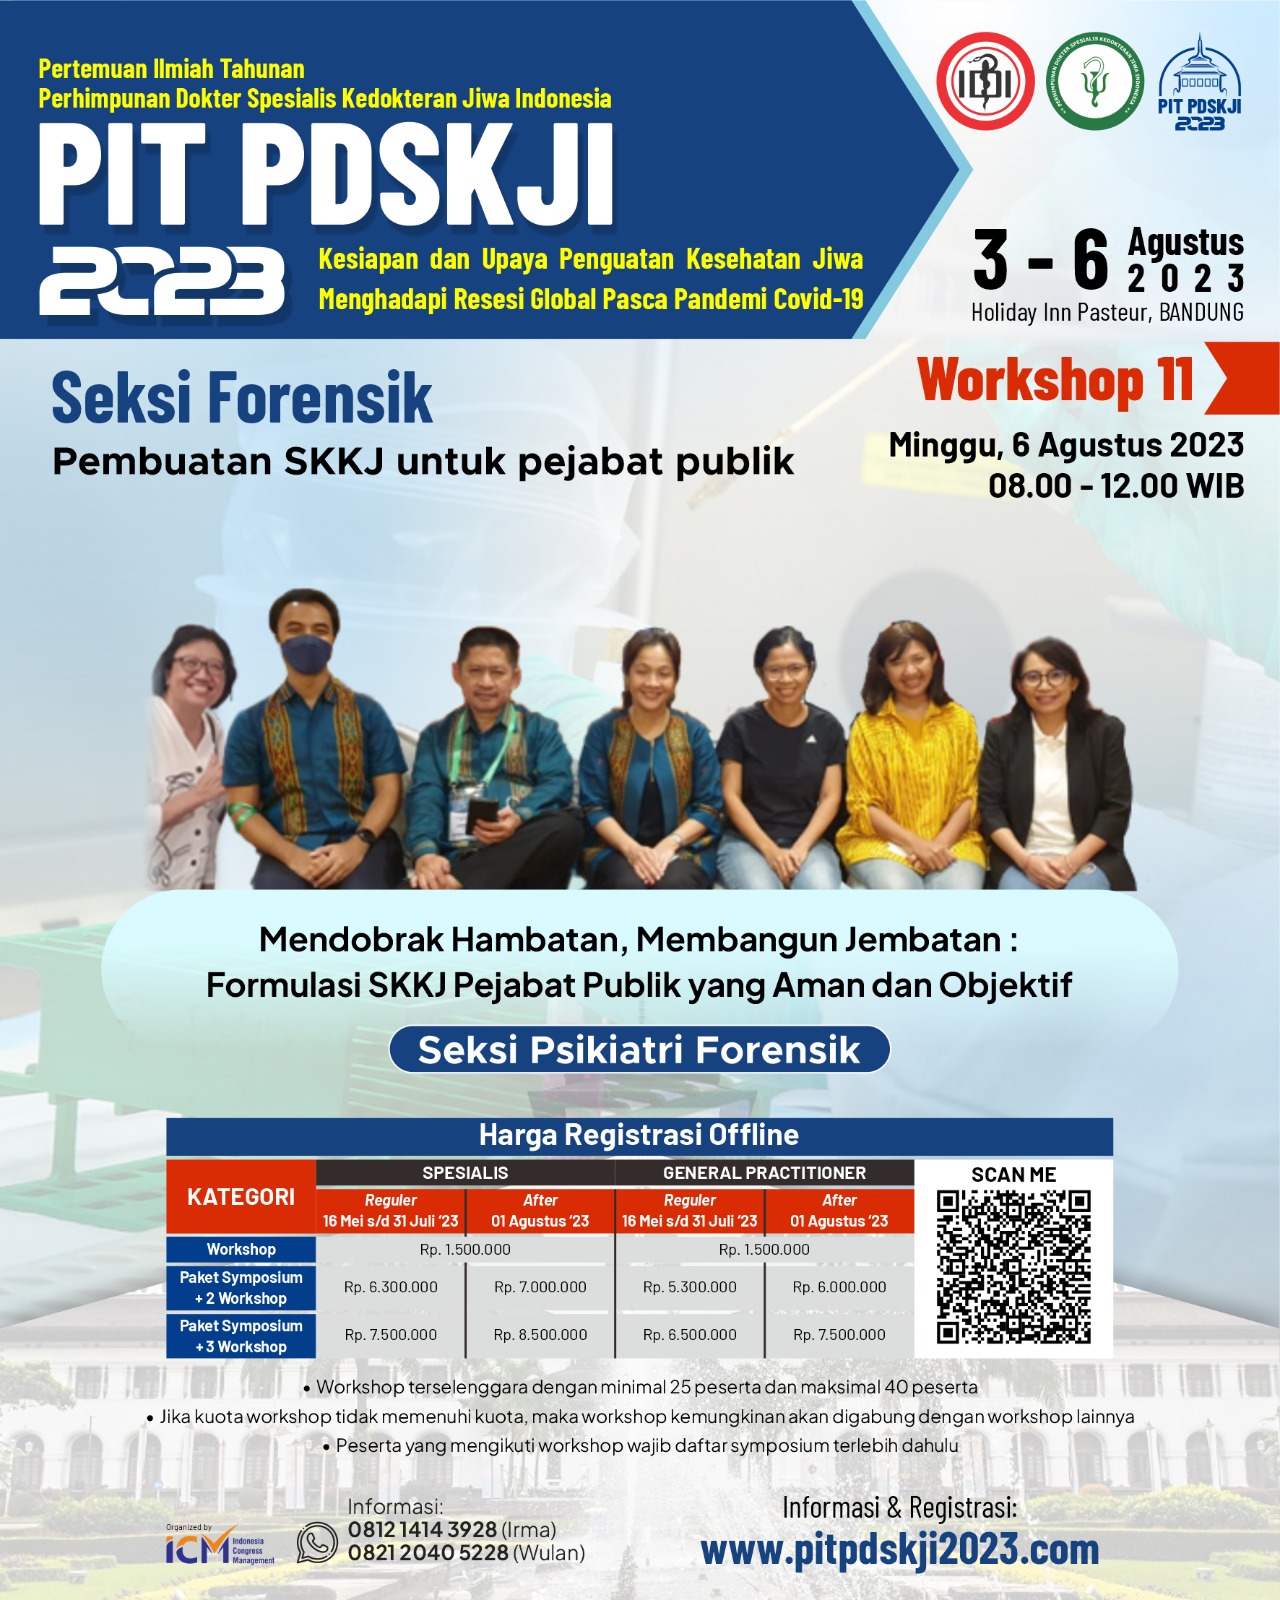 PIT PDSKJI Workshop 11 : Seksi Forensik